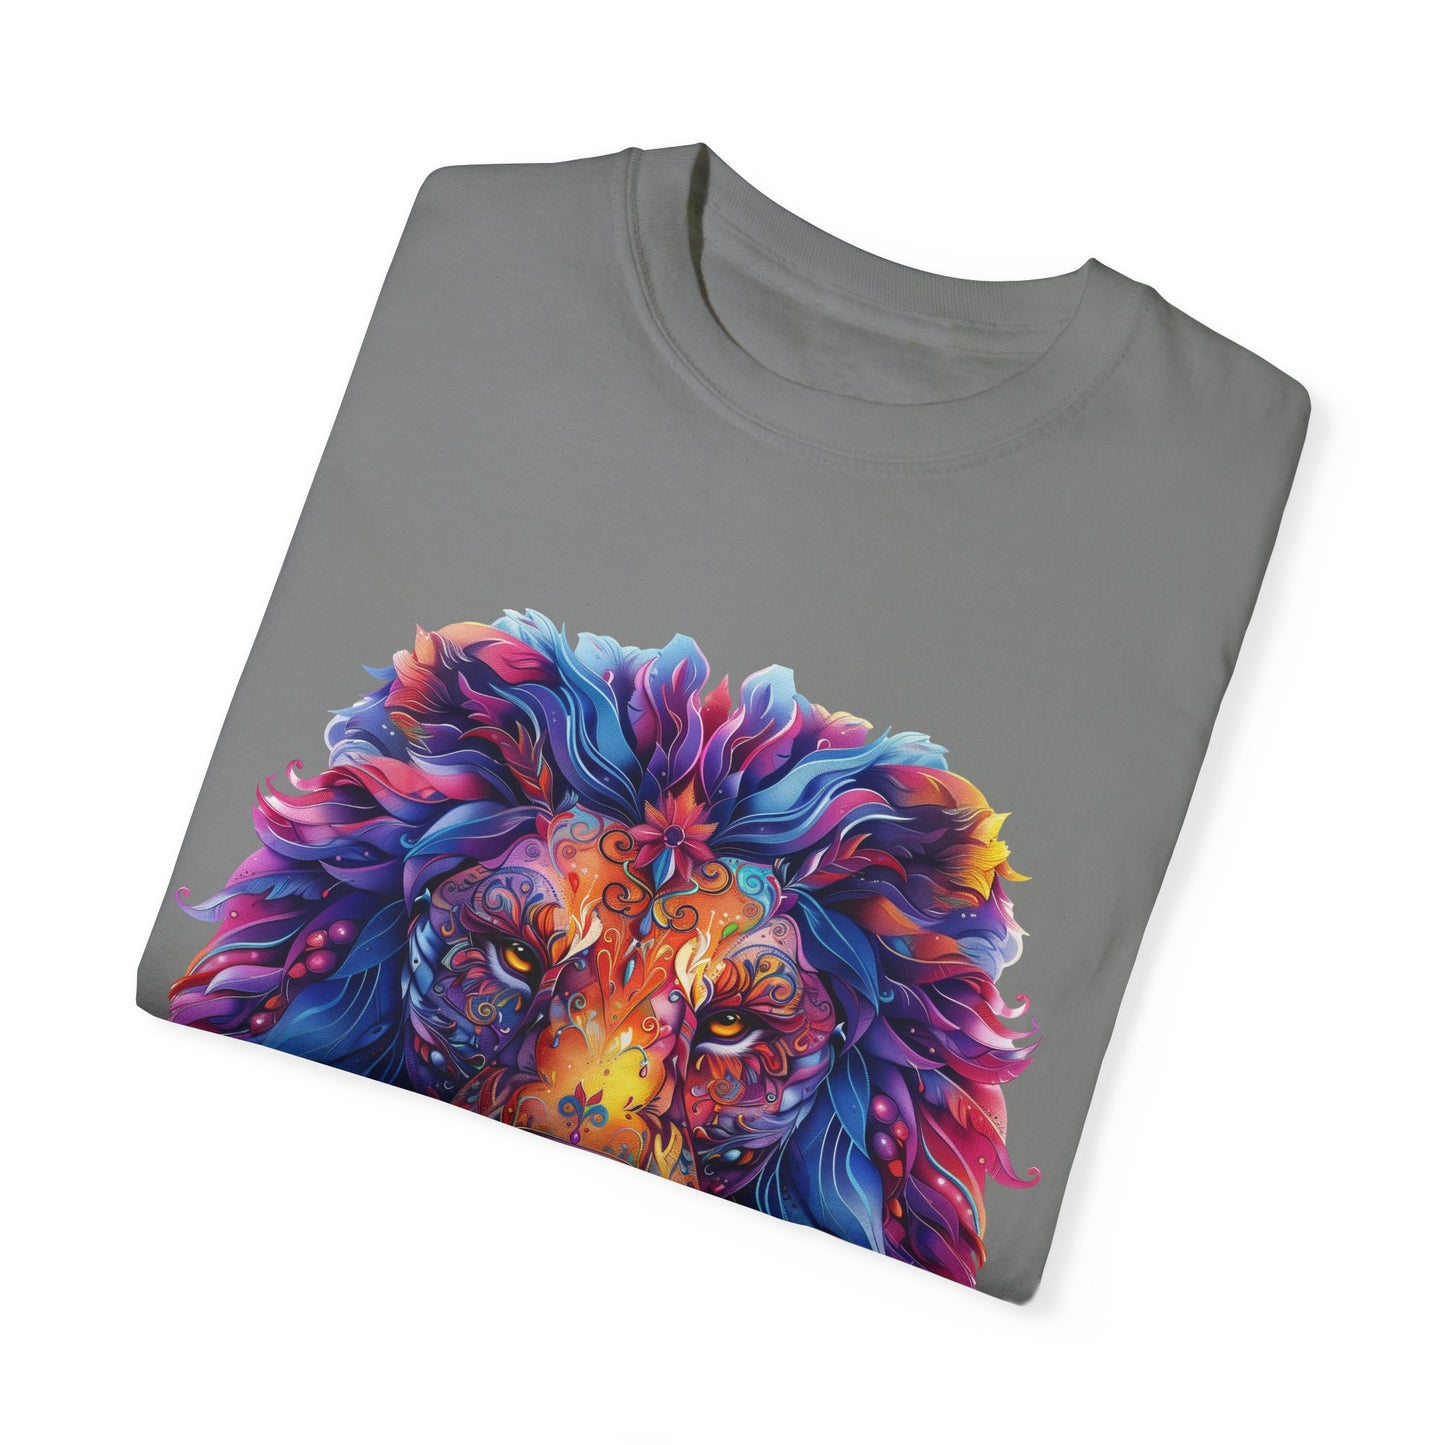 Lion Head Cool Graphic Design Novelty Unisex Garment-dyed T-shirt Cotton Funny Humorous Graphic Soft Premium Unisex Men Women Grey T-shirt Birthday Gift-41